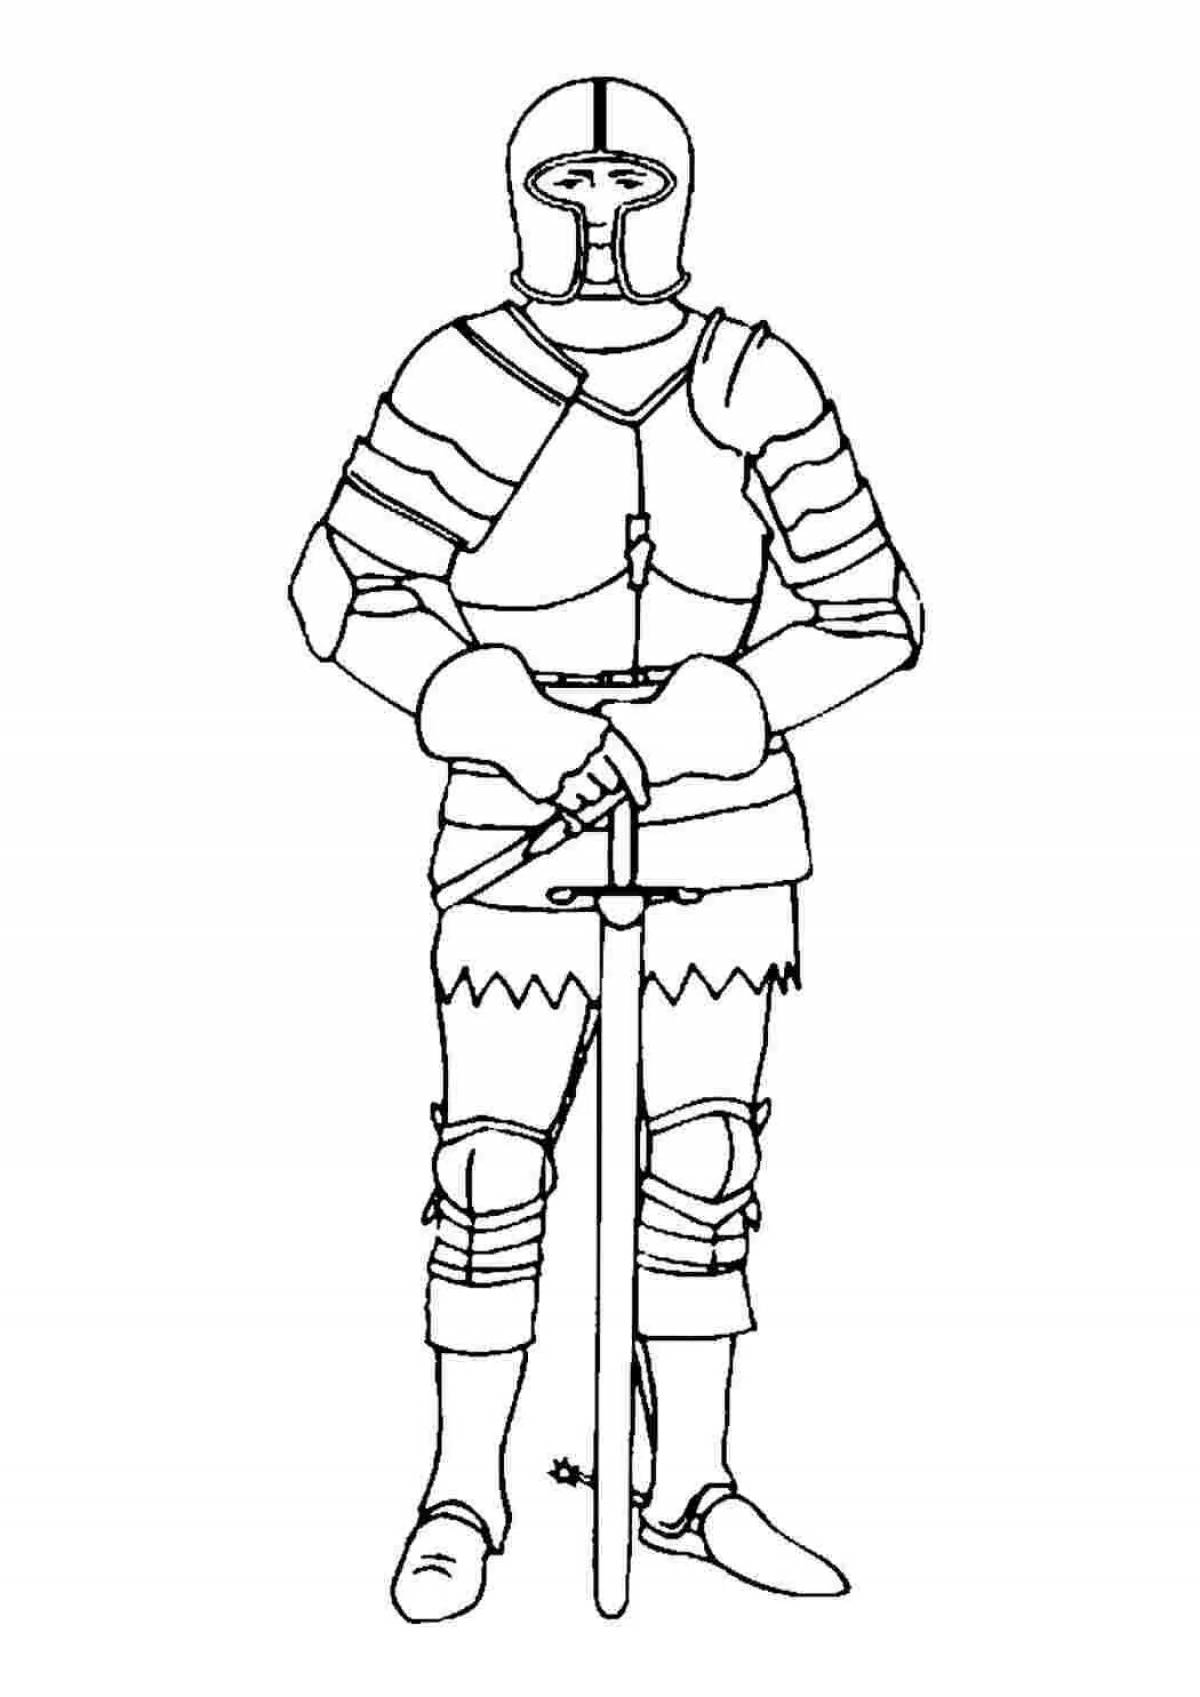 Knight in armor #10